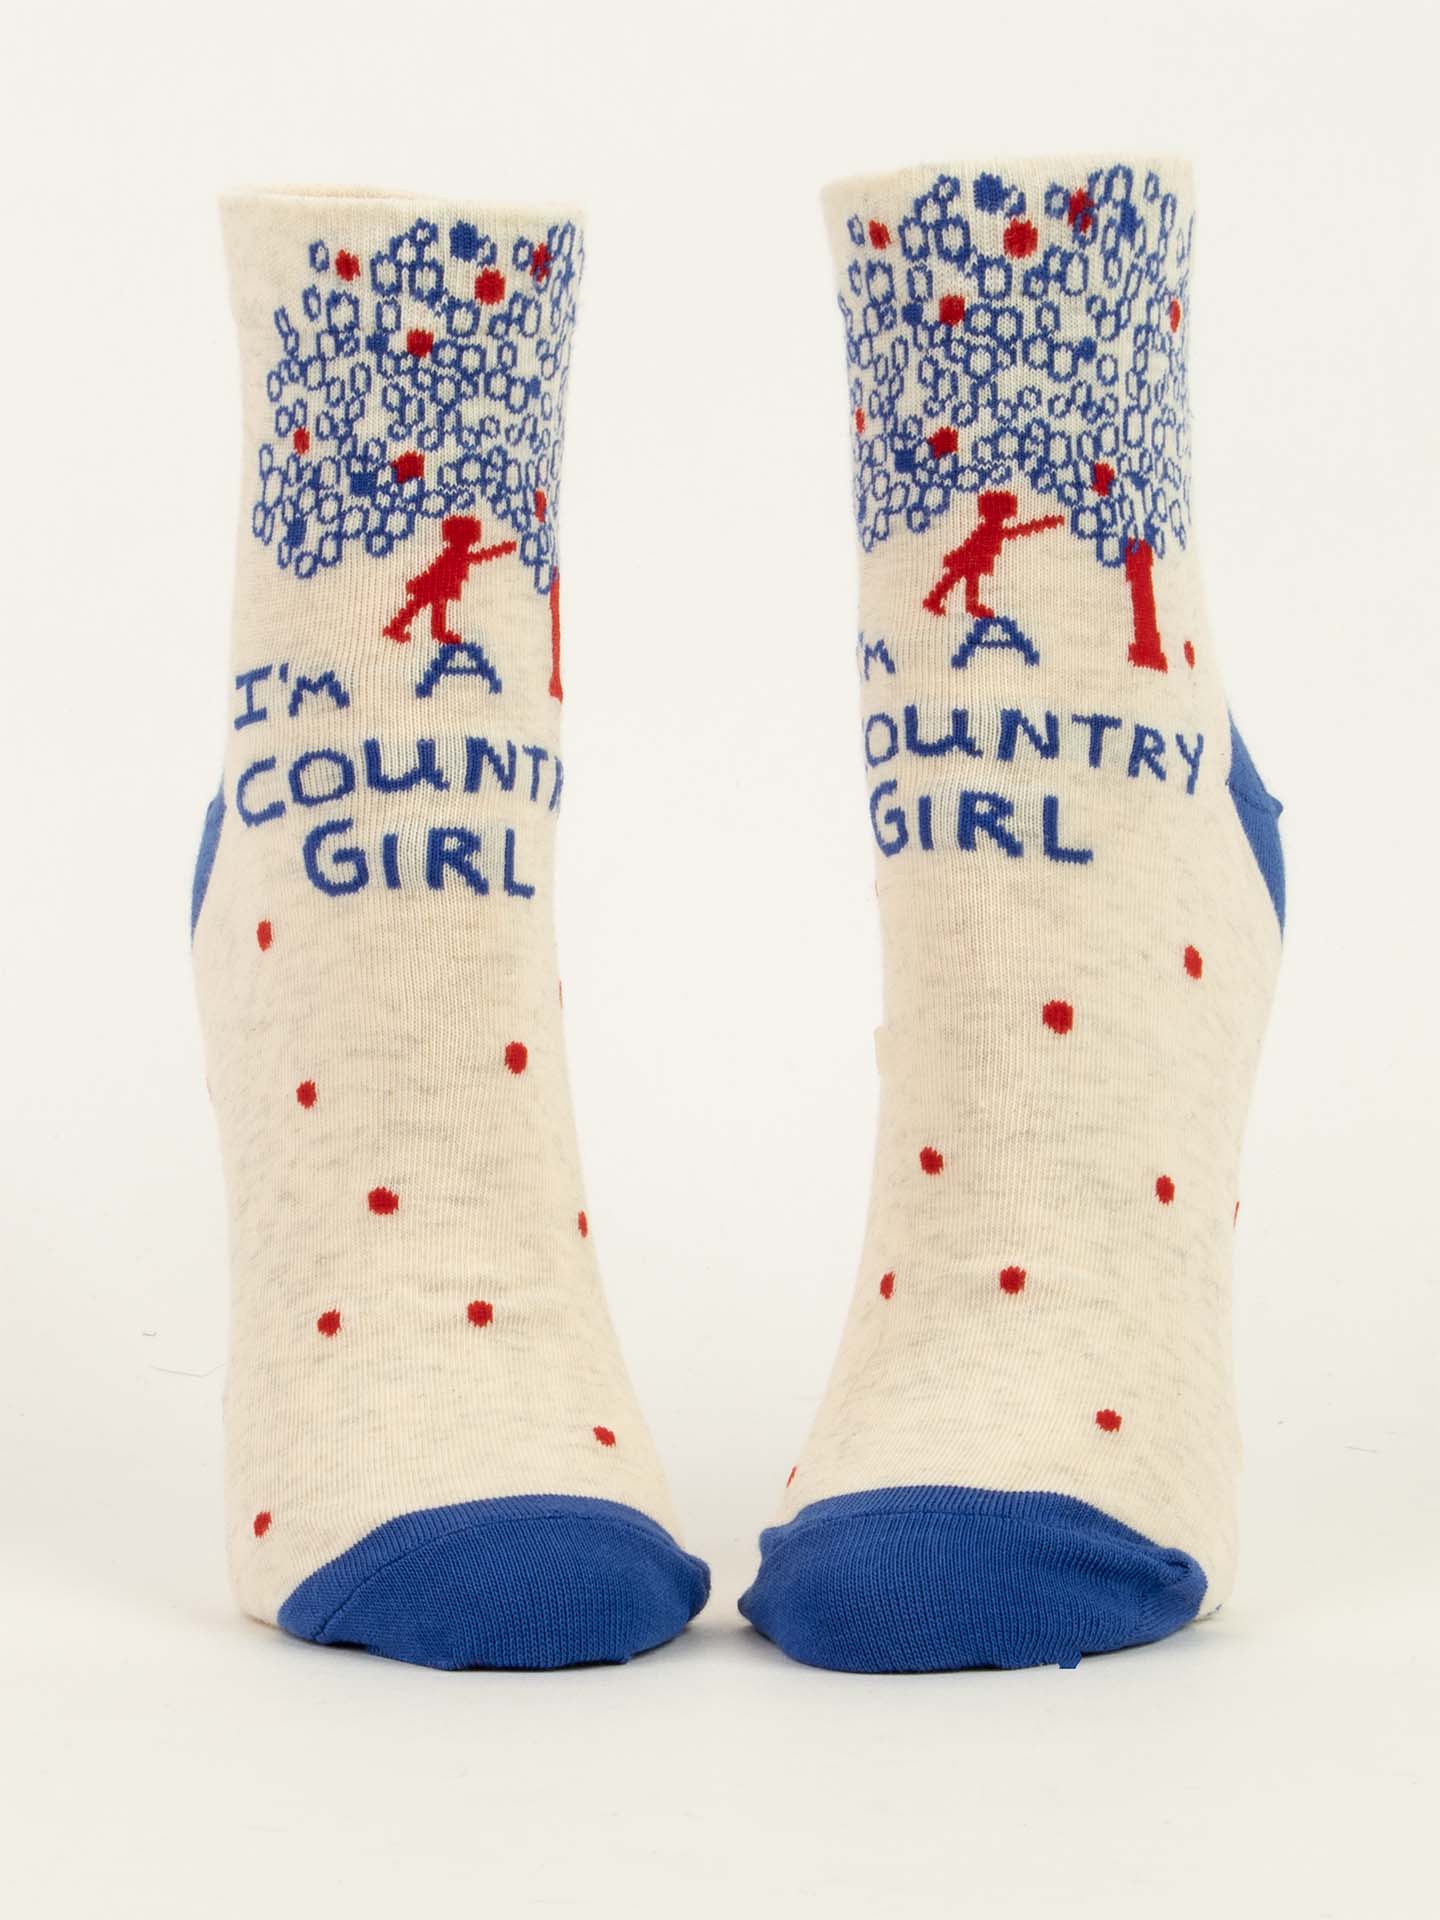 Socks Womens Ankle Socks 3 Pair Lips Kisses Assorted Colors NEW Fun Girls Socks